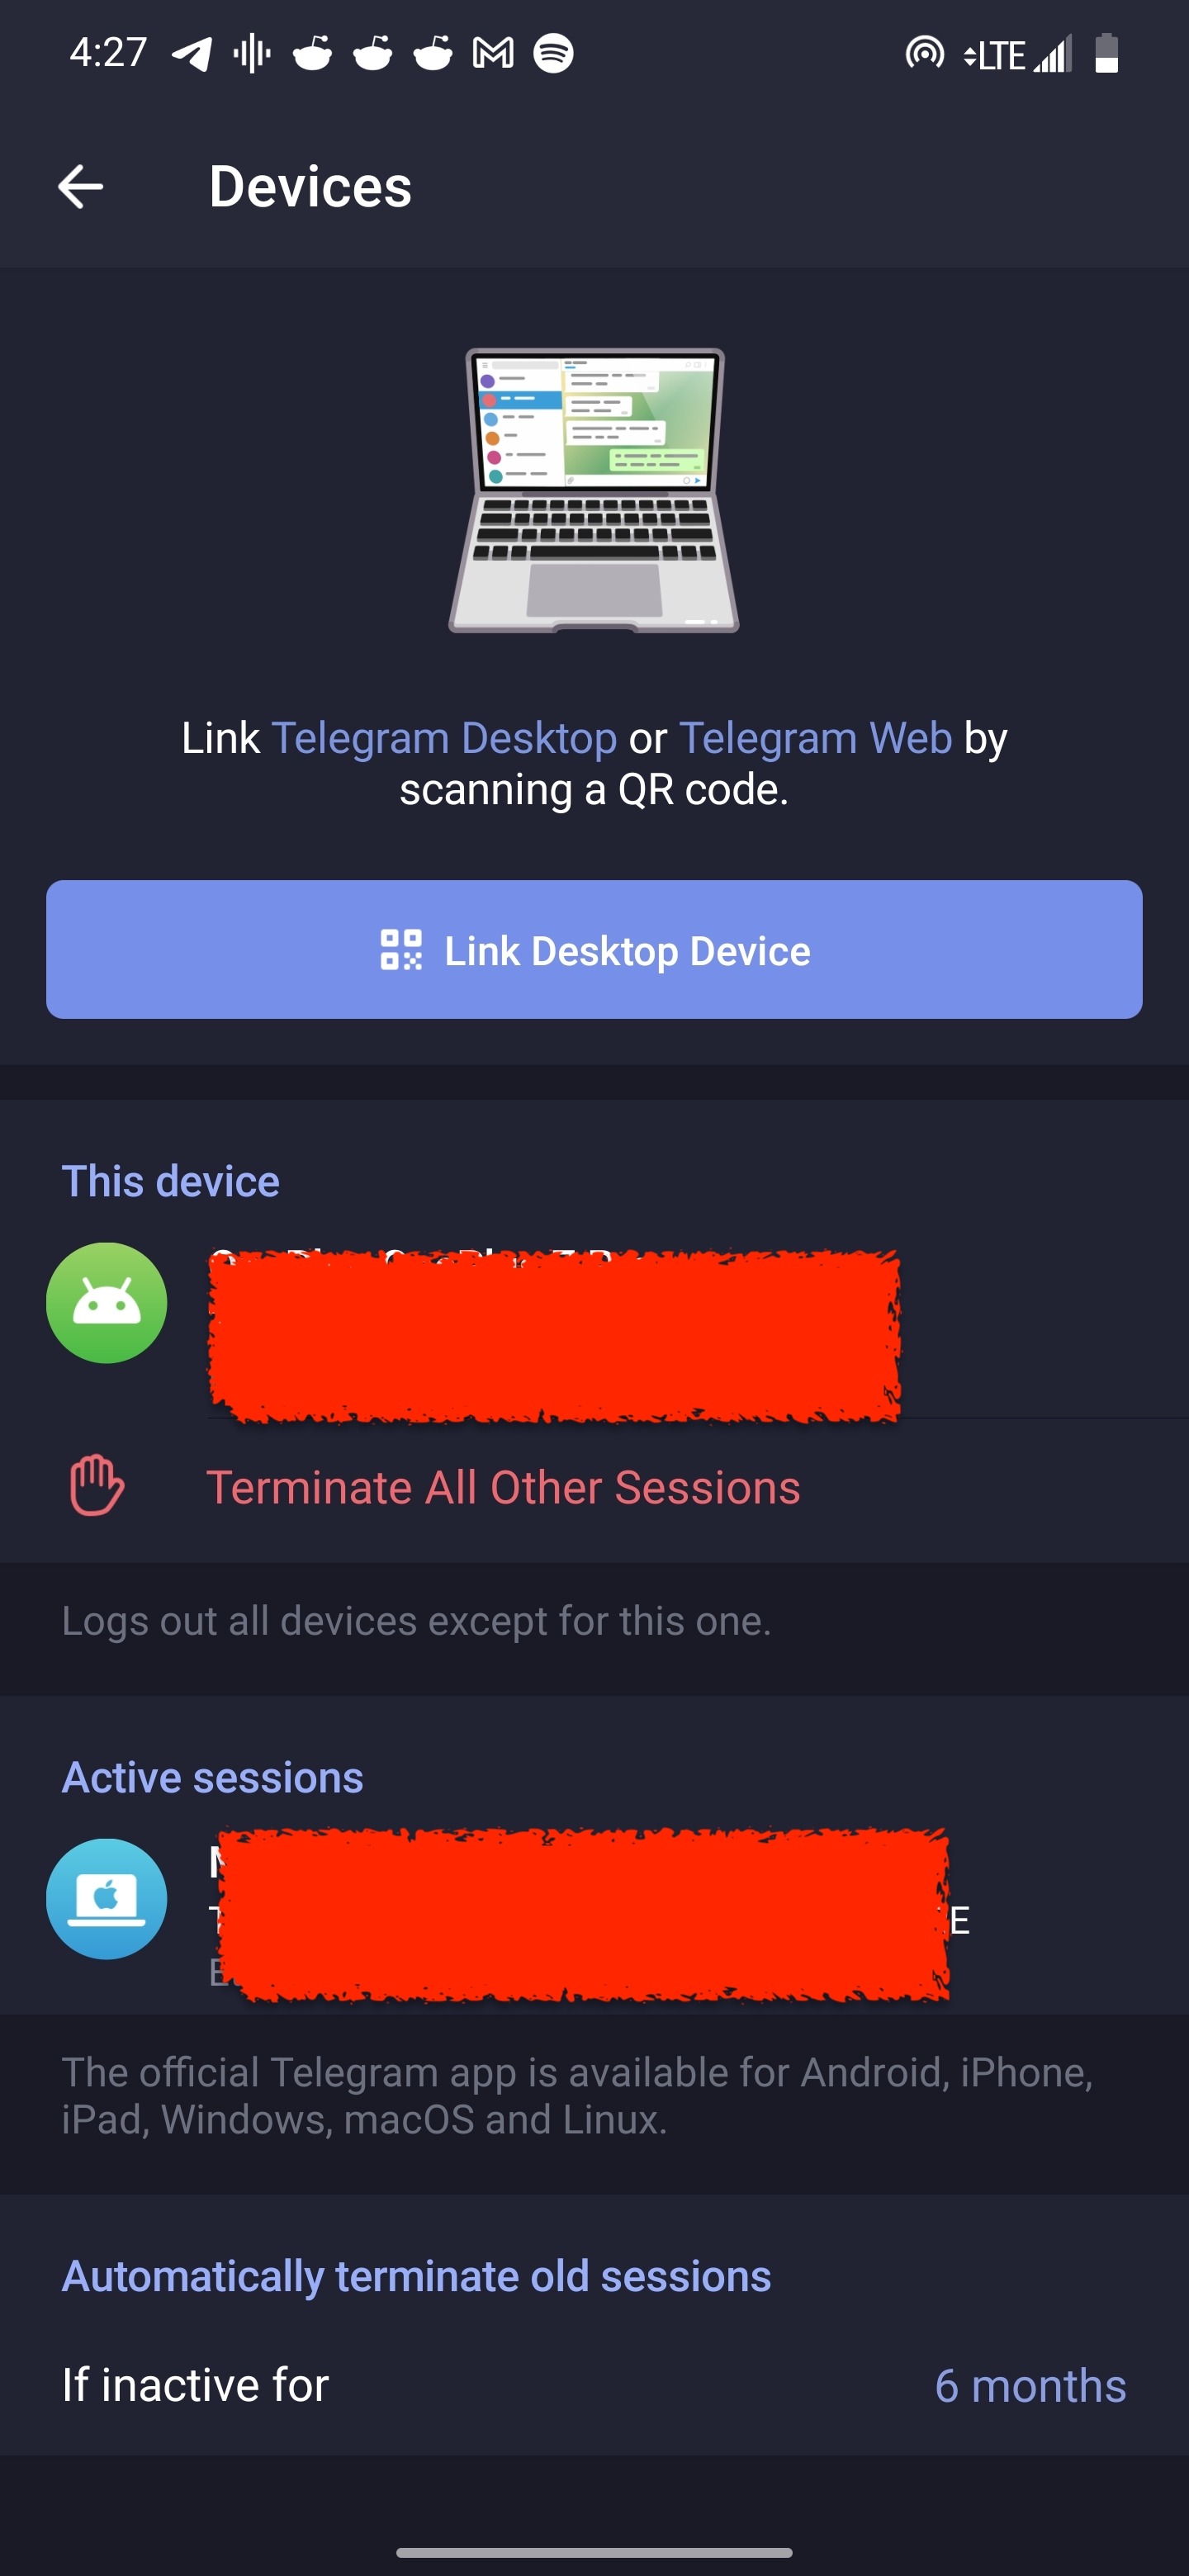 Telegram devices screen/UI